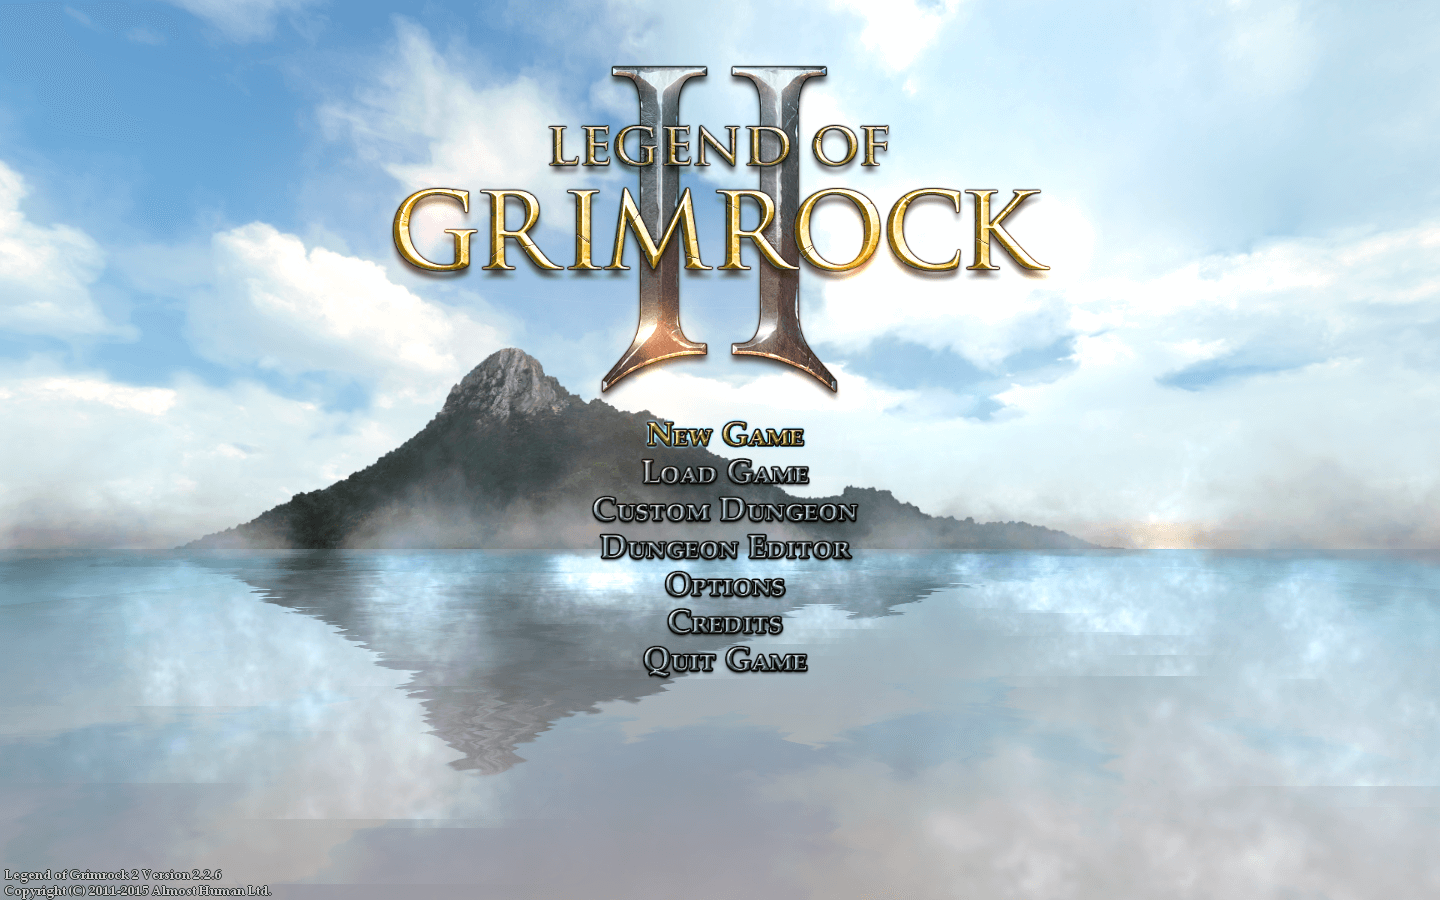 魔岩山传说2 for Mac v2.2.6 Legend of Grimrock 2 英文原生版 苹果电脑